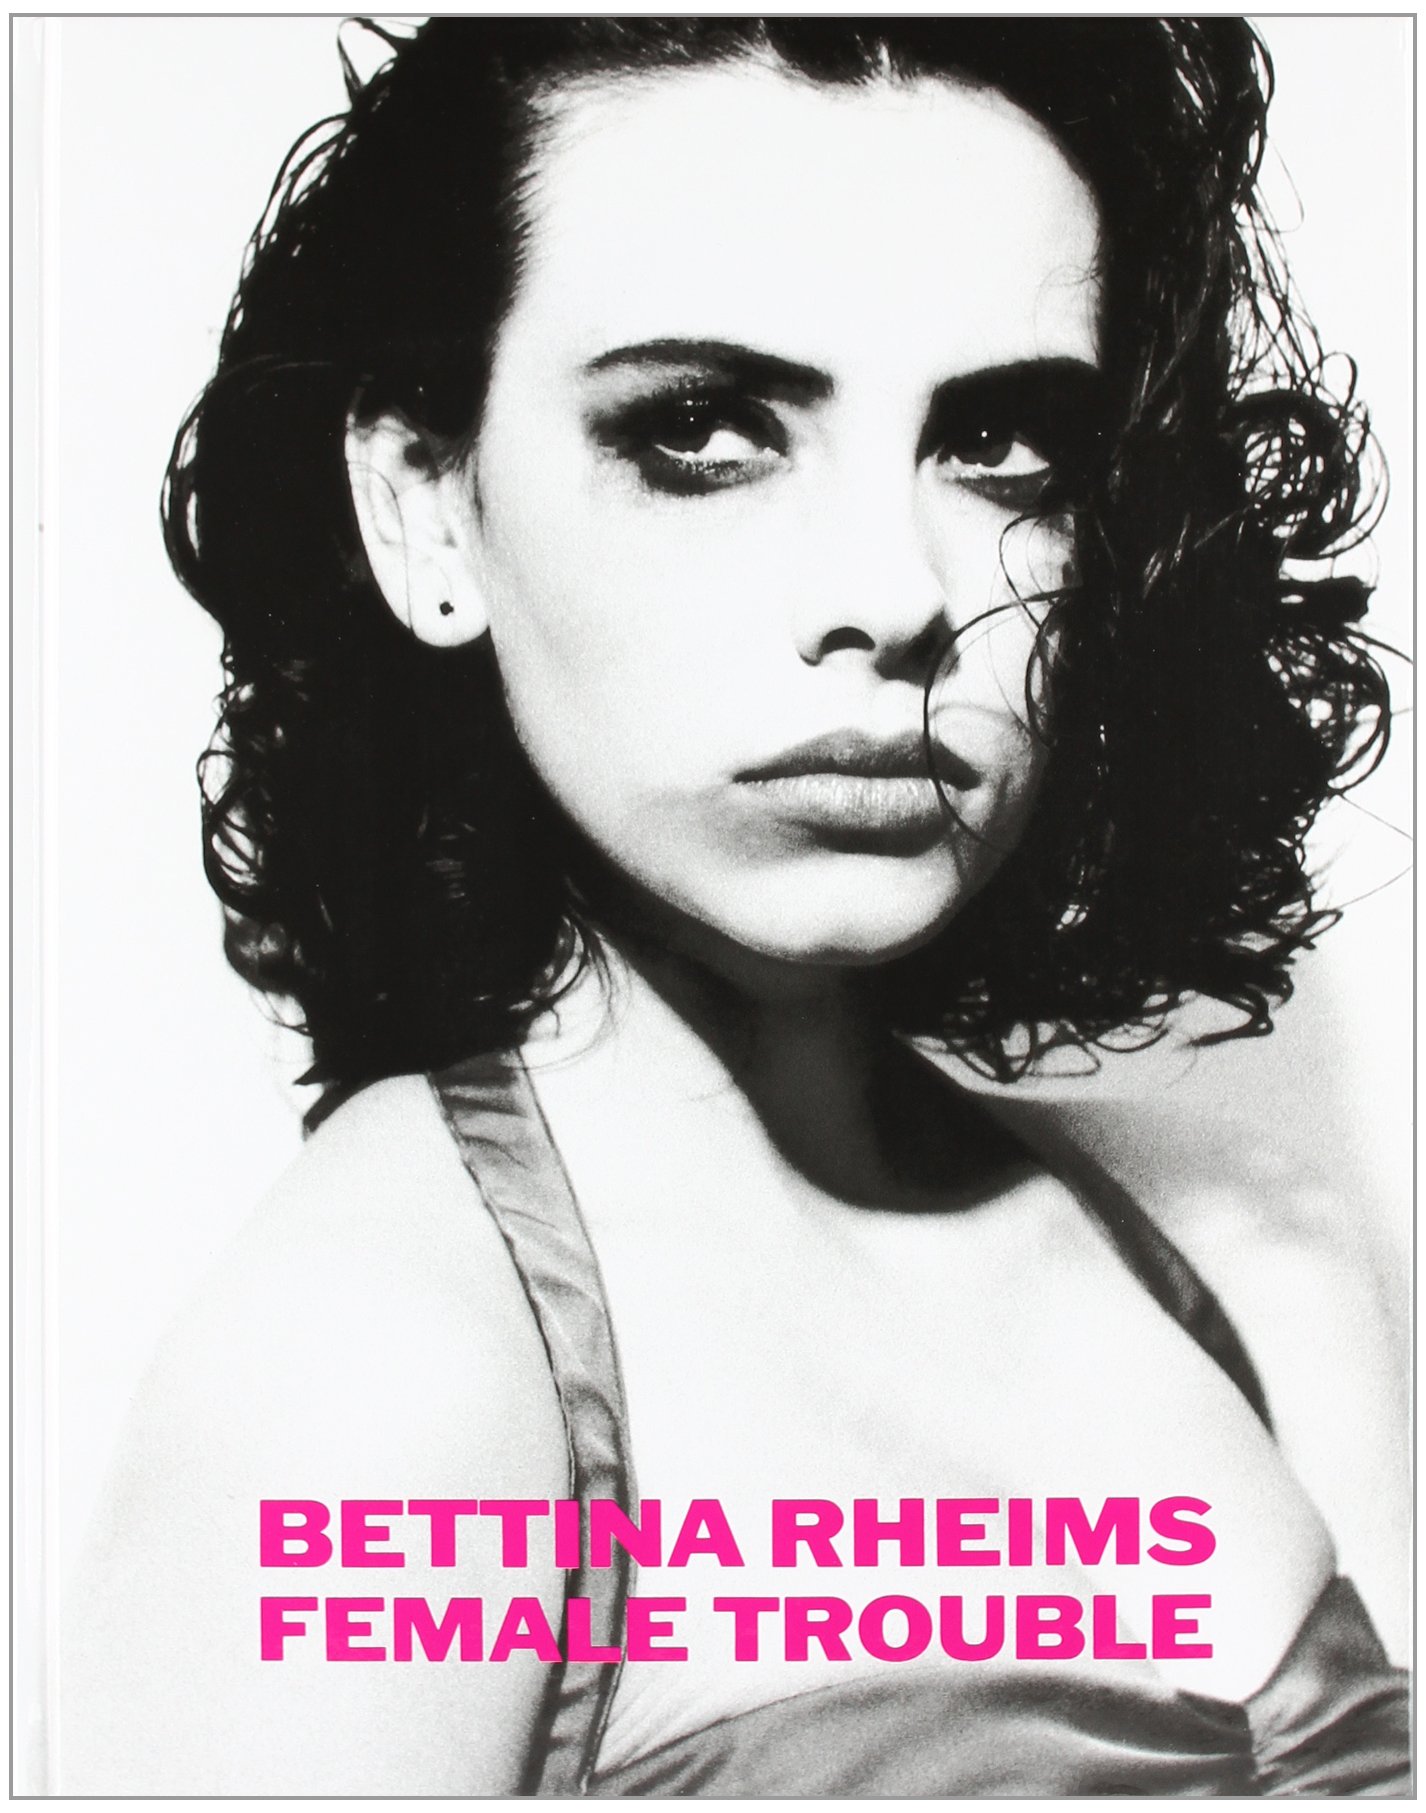 Female Trouble, 1989. Беттина Реймс (Bettina Rheims) - современный французский фотограф. Современная фотография. Фотография как искусство